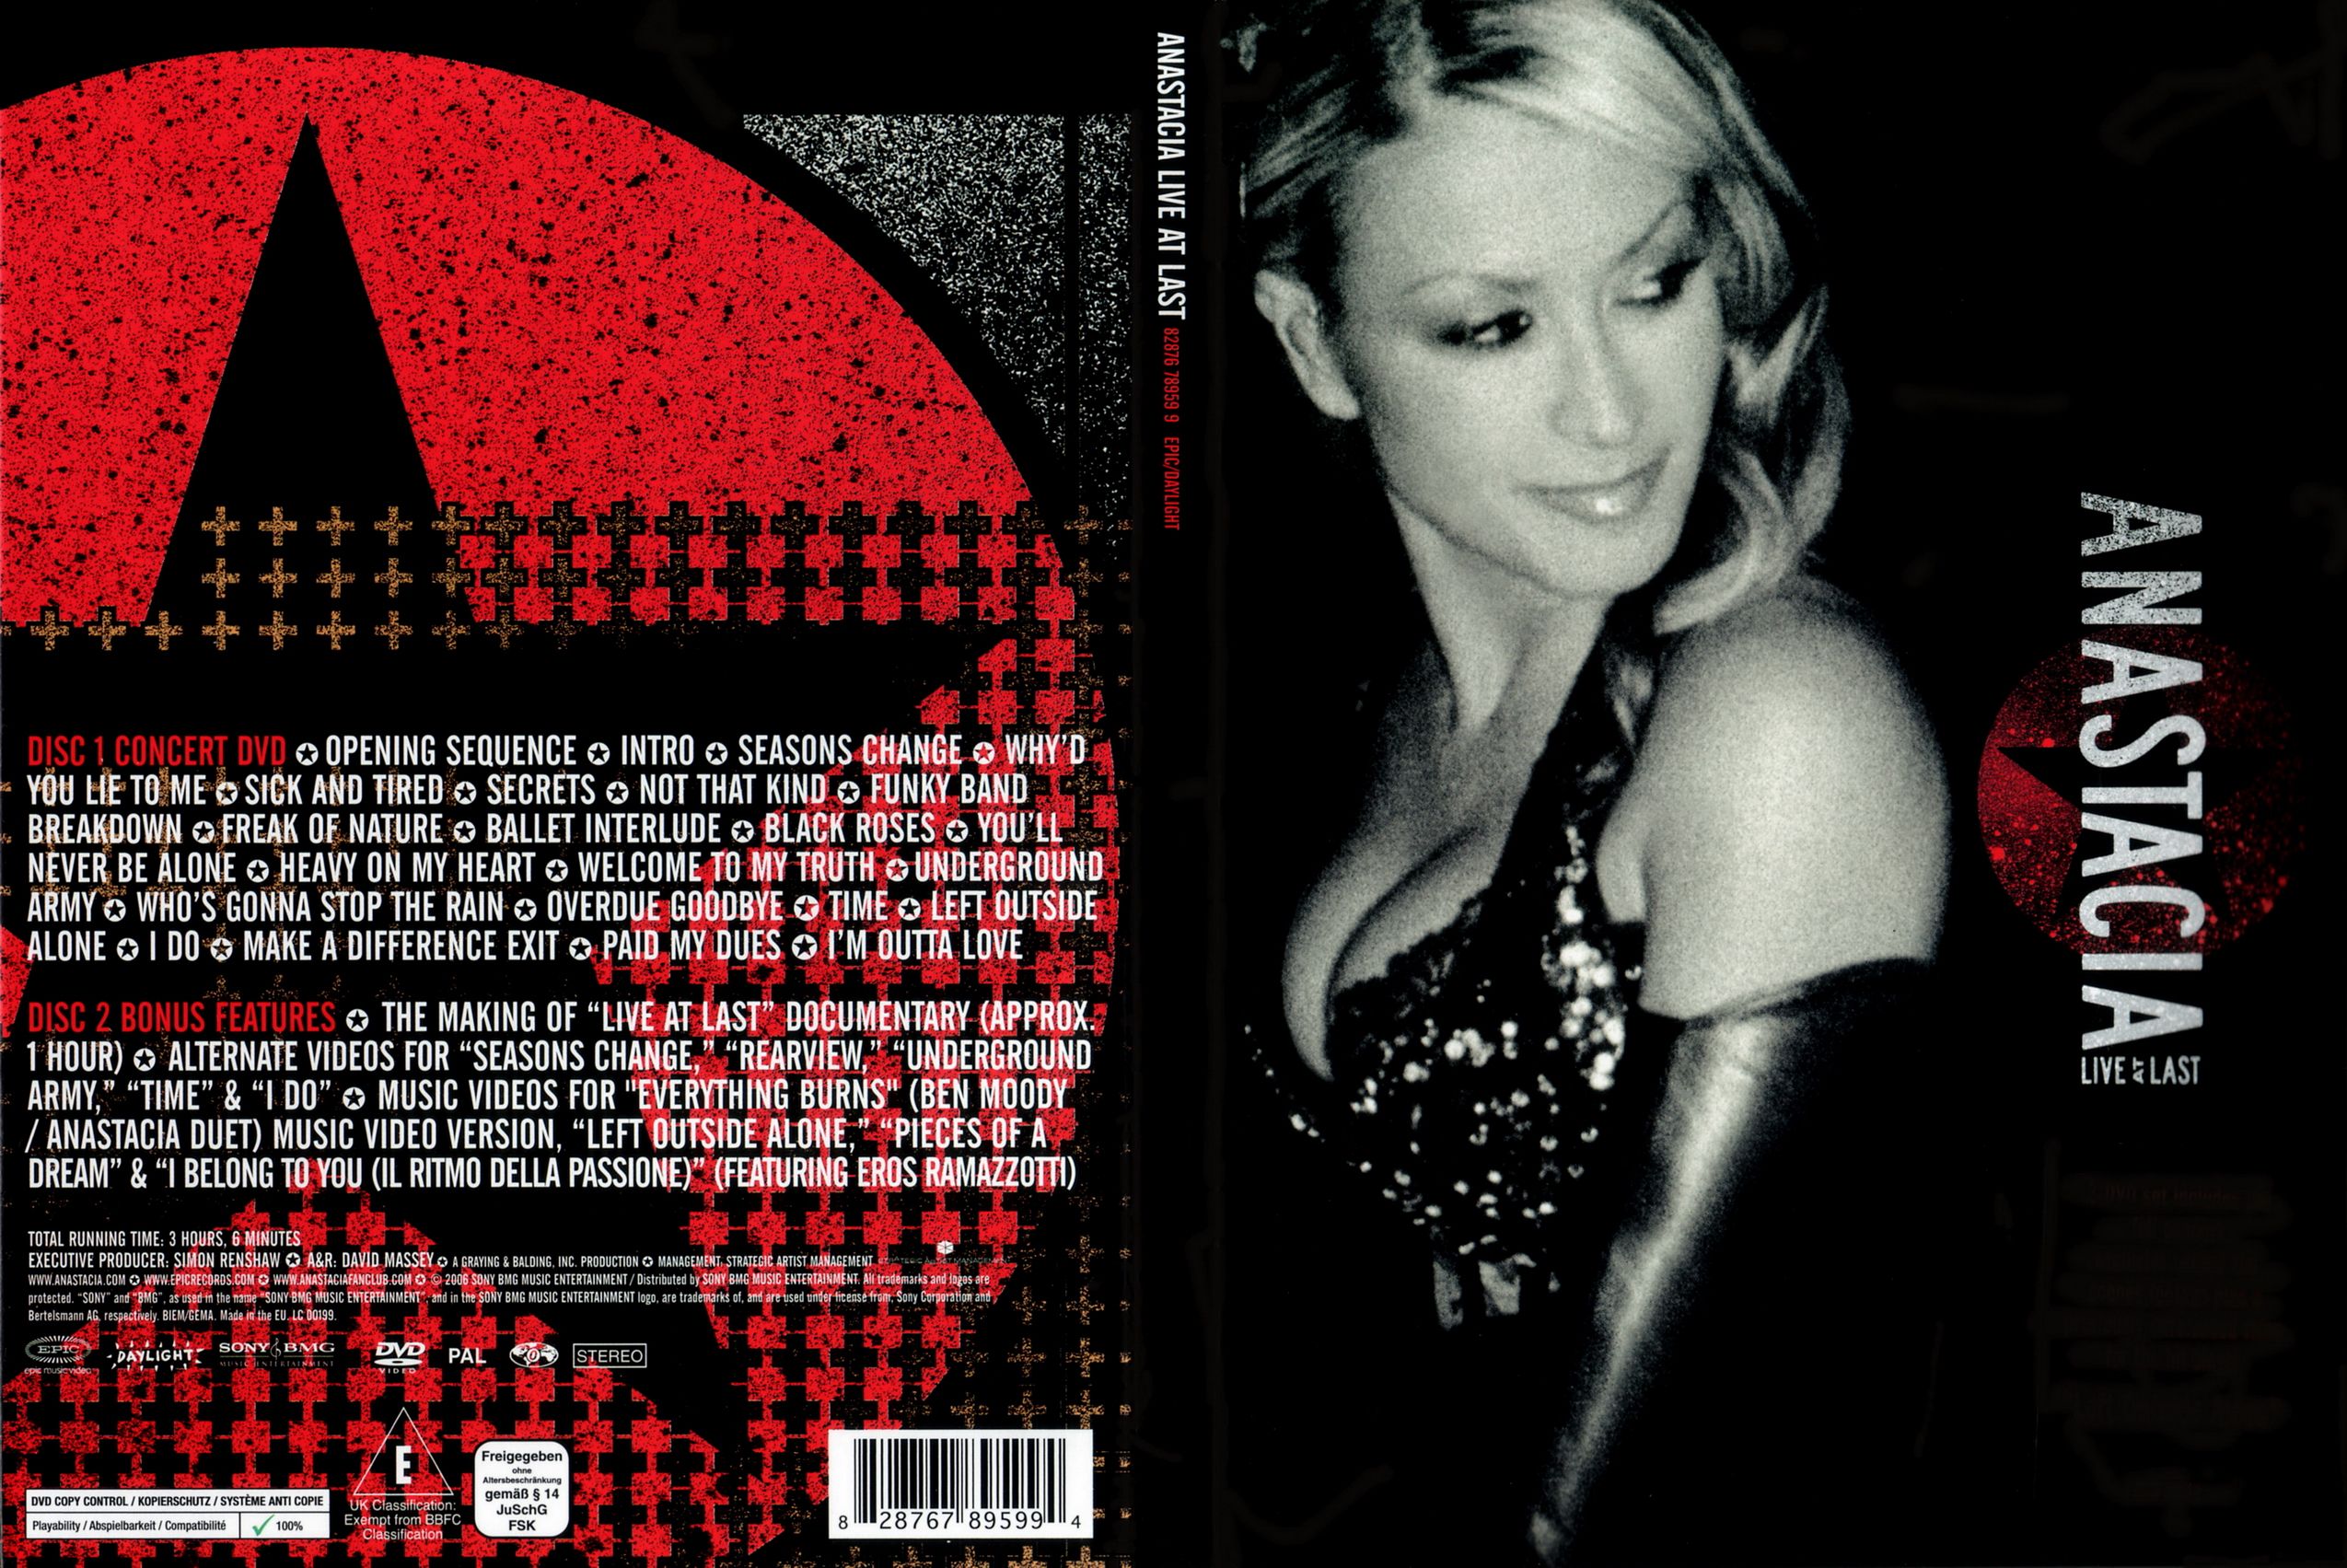 Jaquette DVD Anastacia live at last